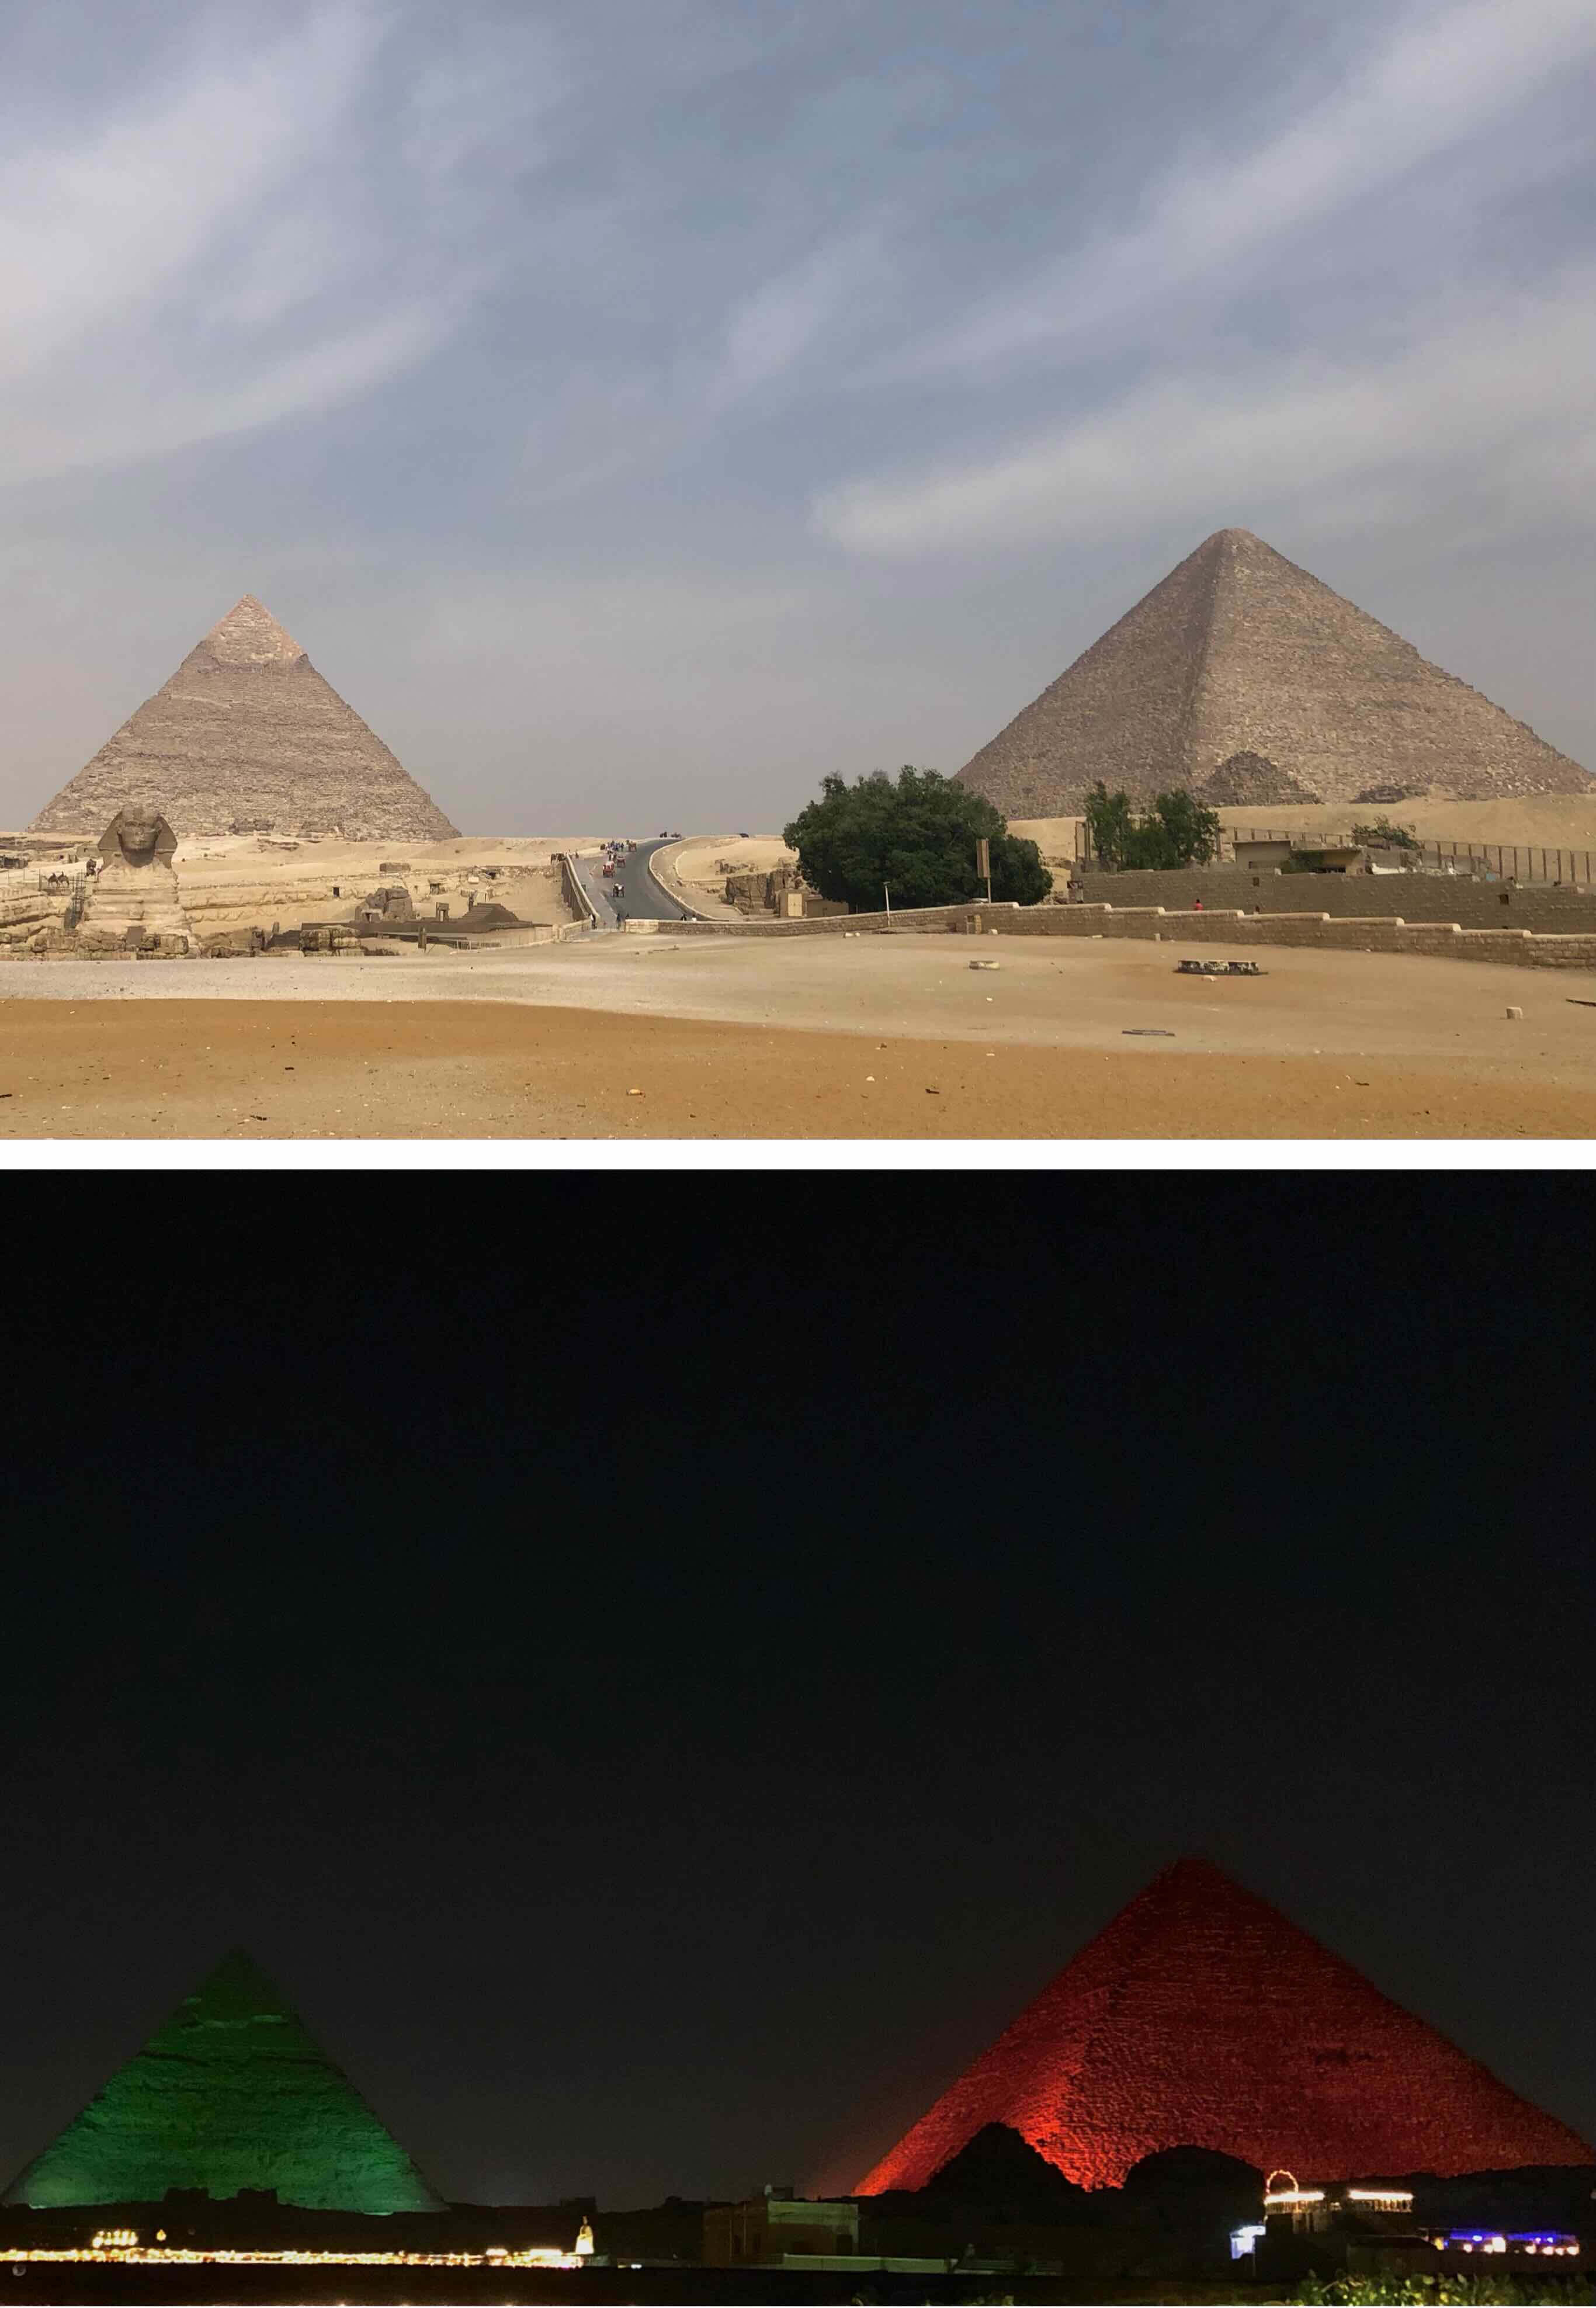 pyramids day and night